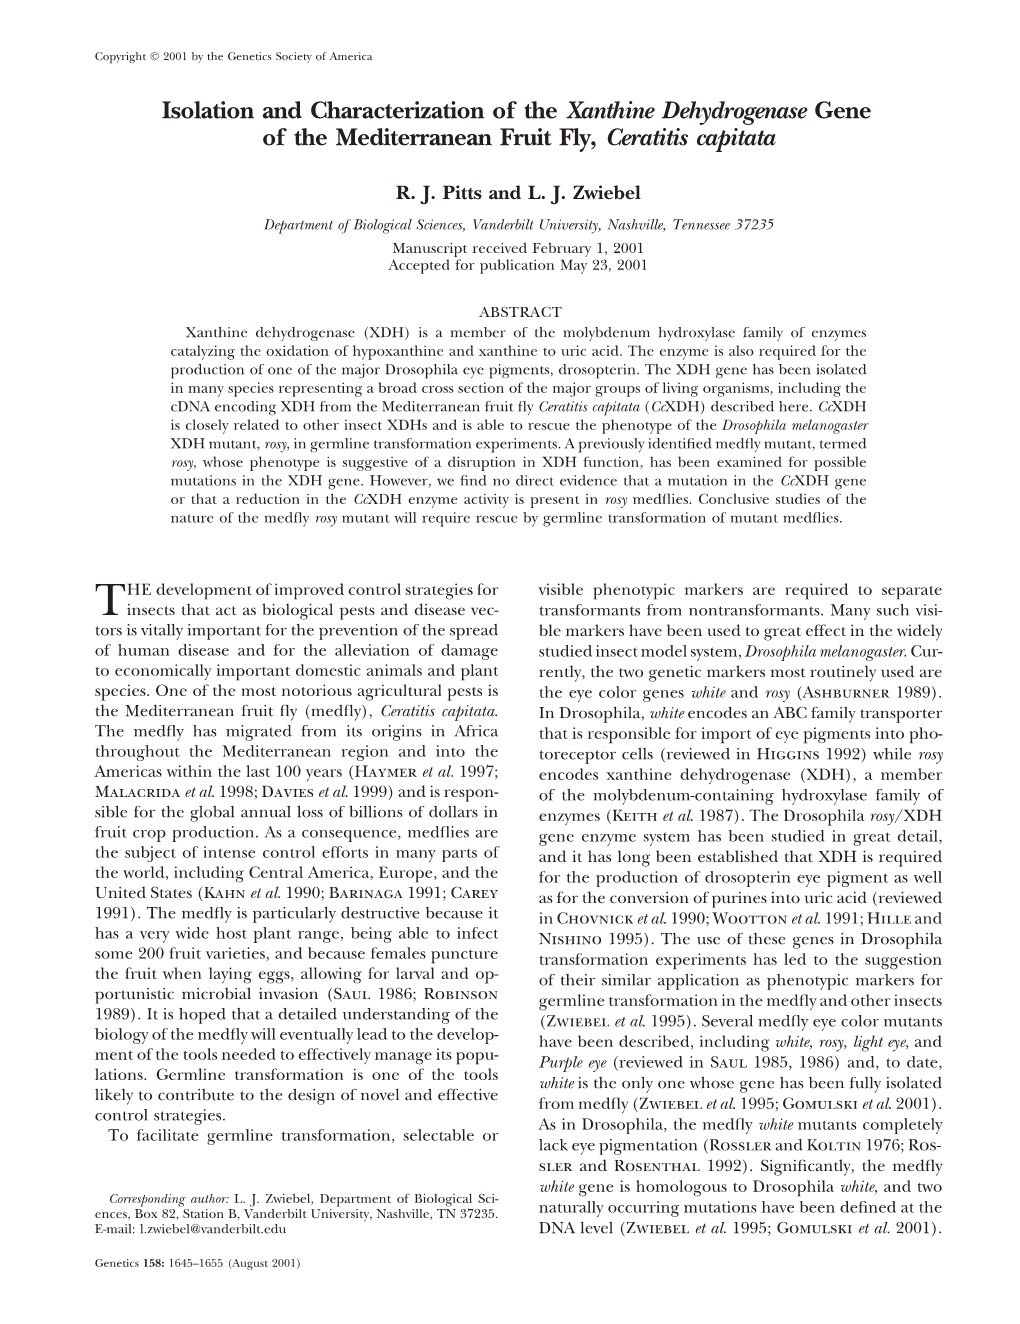 Isolation and Characterization of the Xanthine Dehydrogenase Gene of the Mediterranean Fruit Fly, Ceratitis Capitata